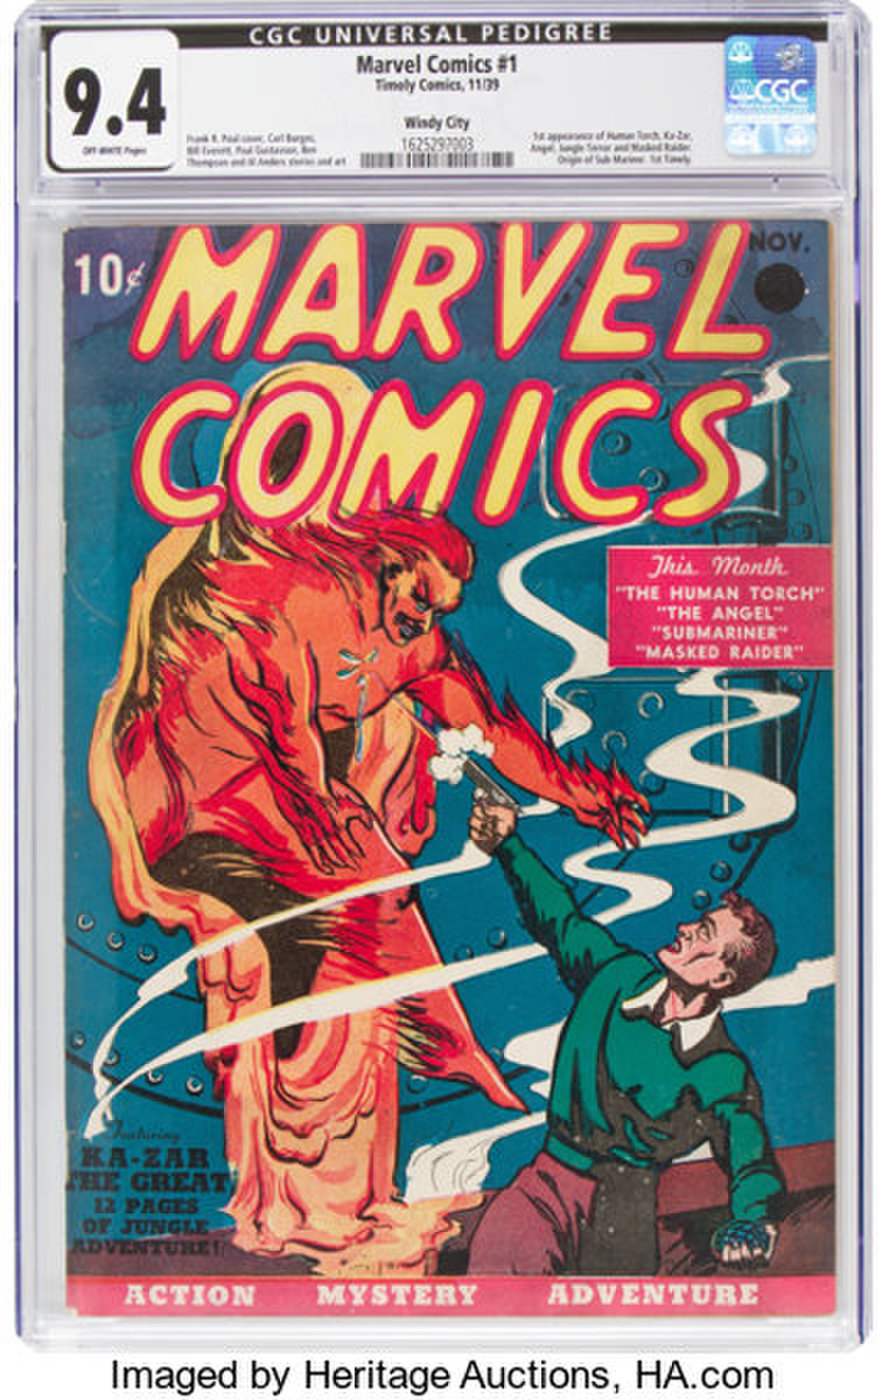 "Marvel Comics #1" : de 10 cents à 1,26 millions de dollars